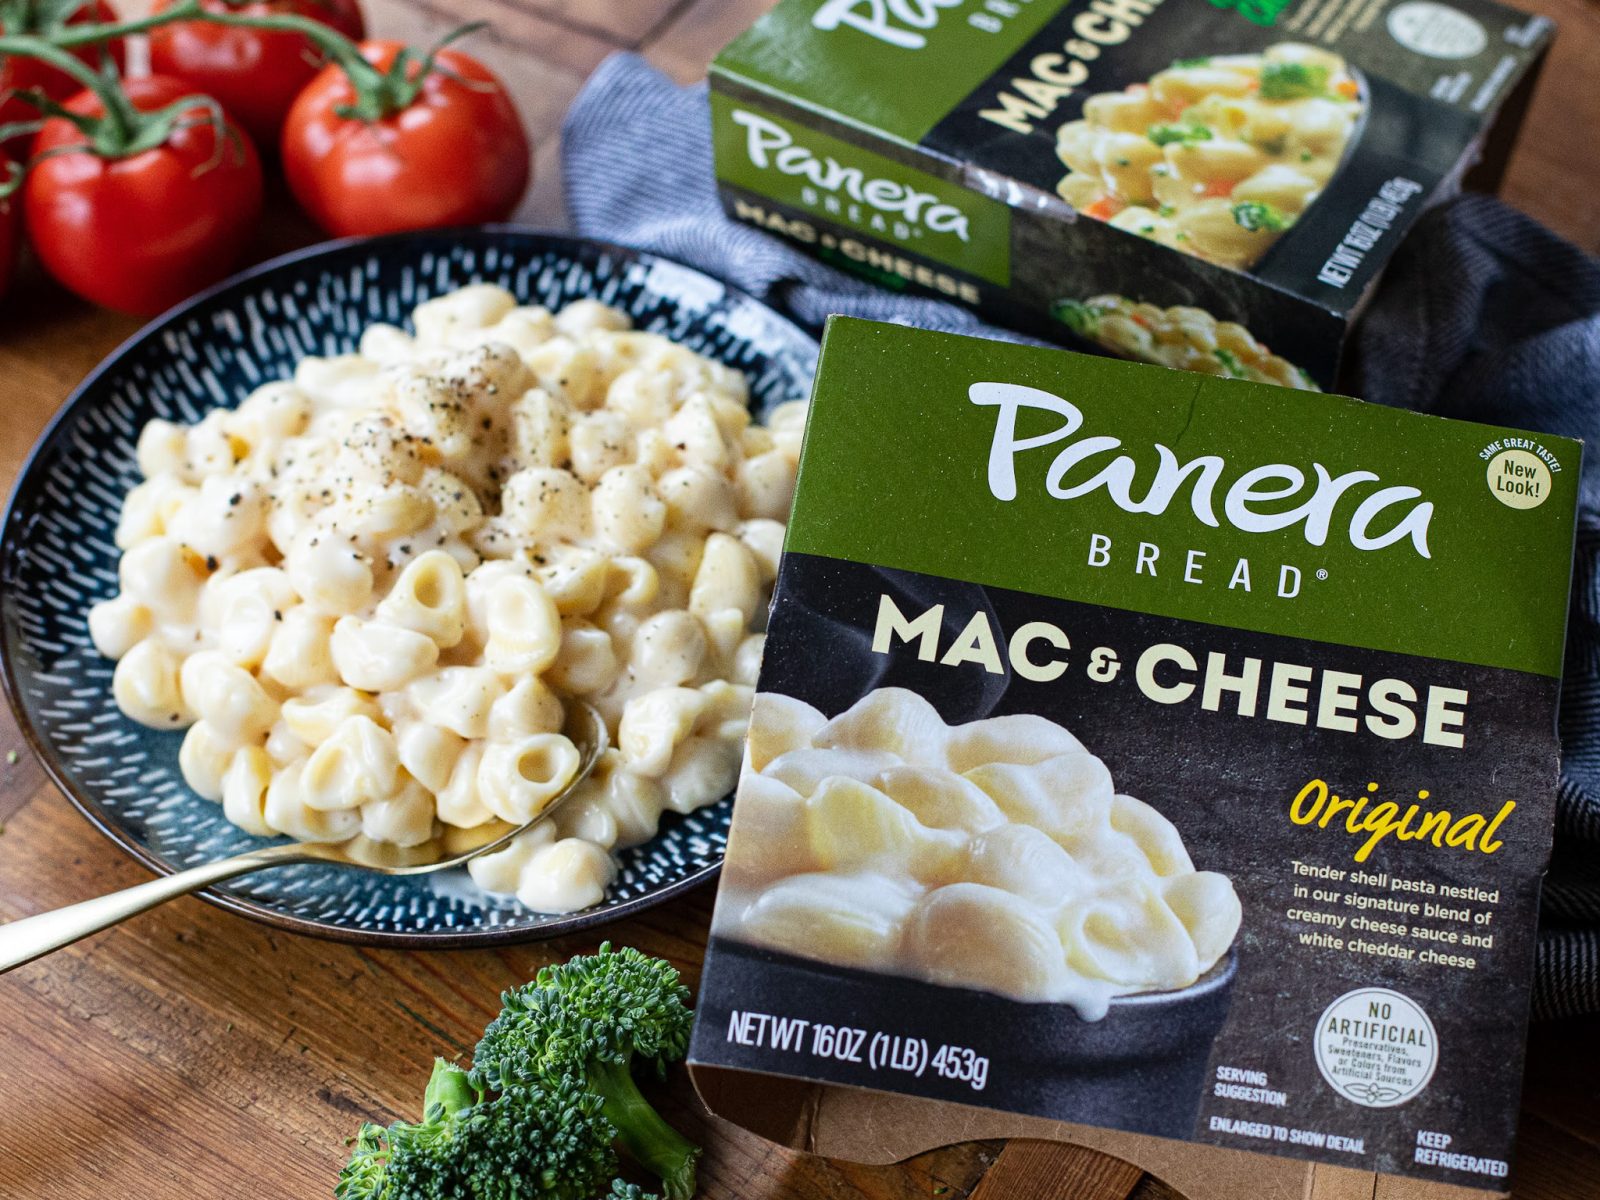 Panera Mac & Cheese Just $4.49 At Publix (Regular Price $6.49)